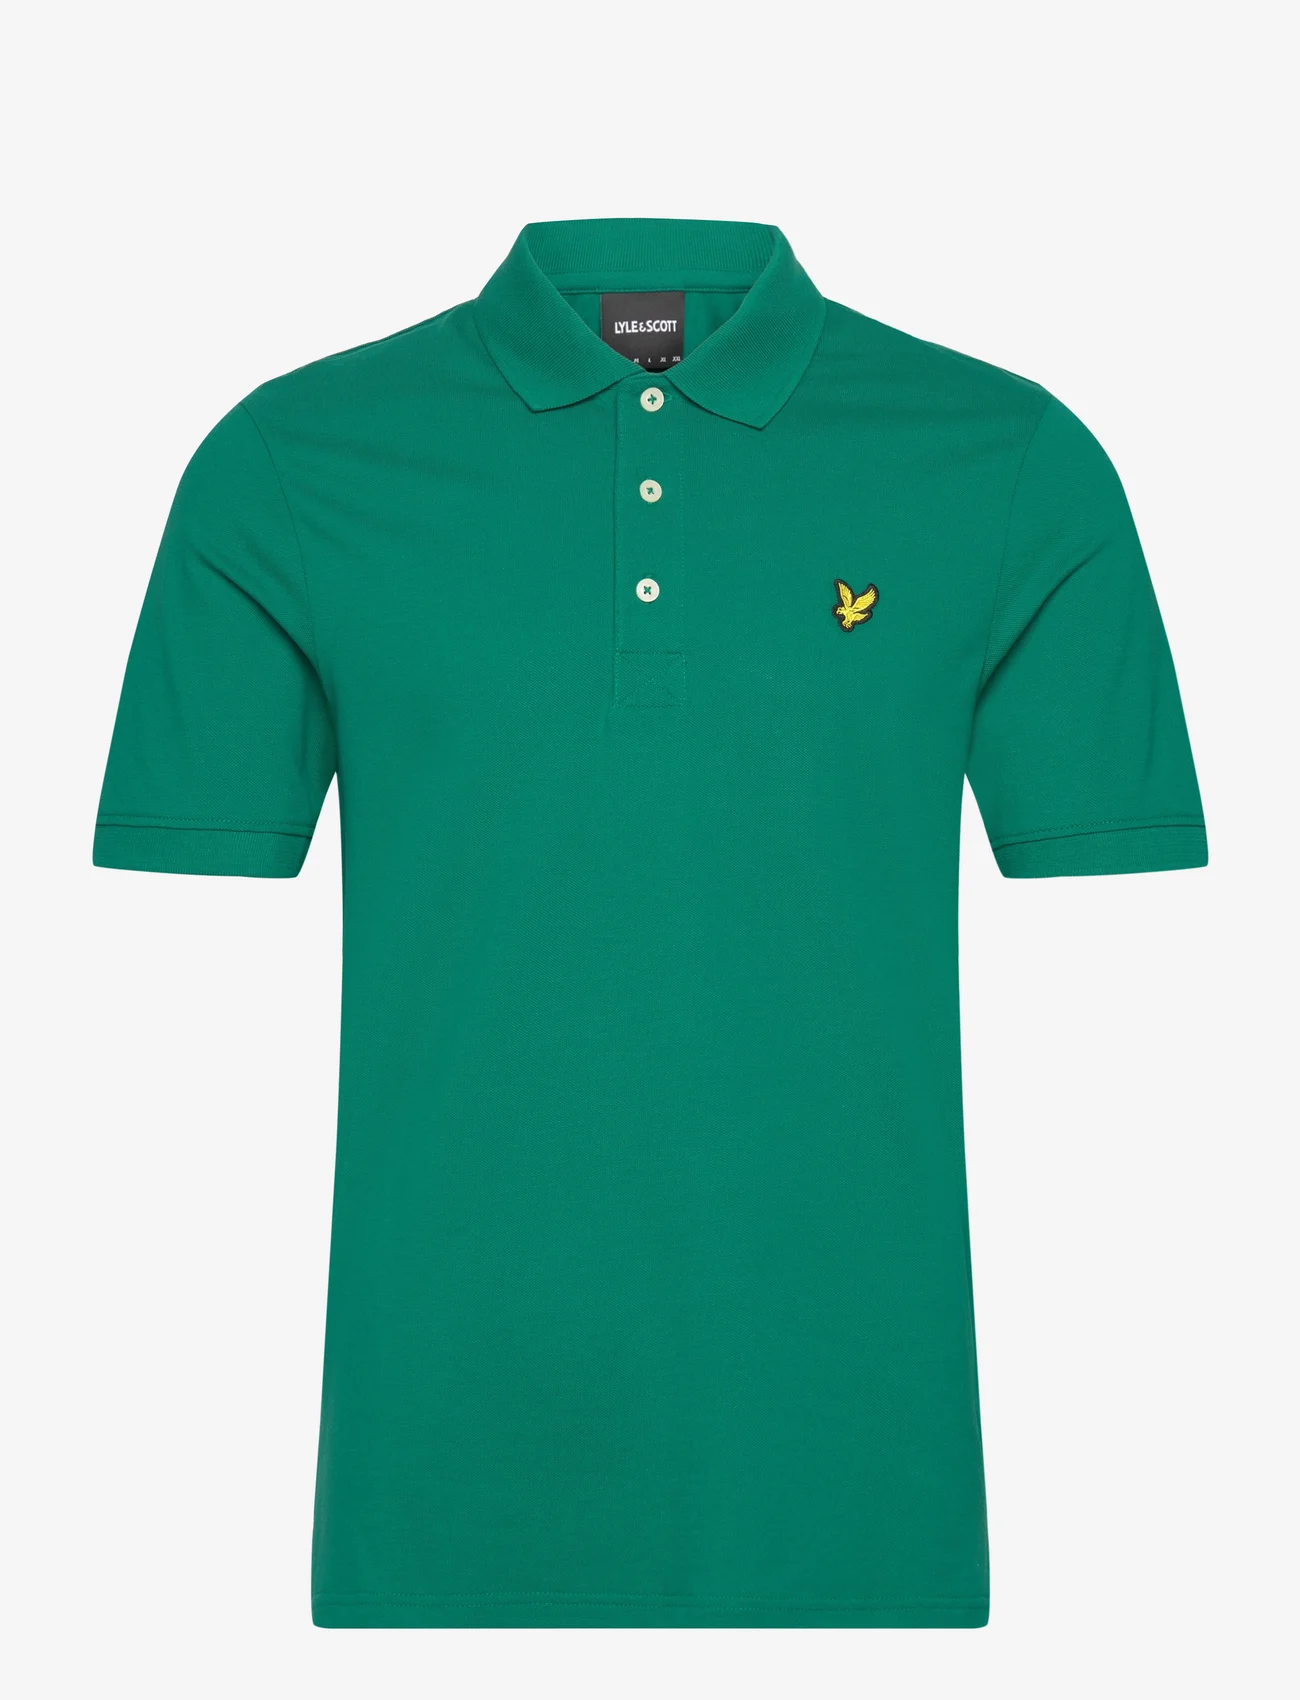 Lyle & Scott - Plain Polo Shirt - kortærmede poloer - x154 court green - 0